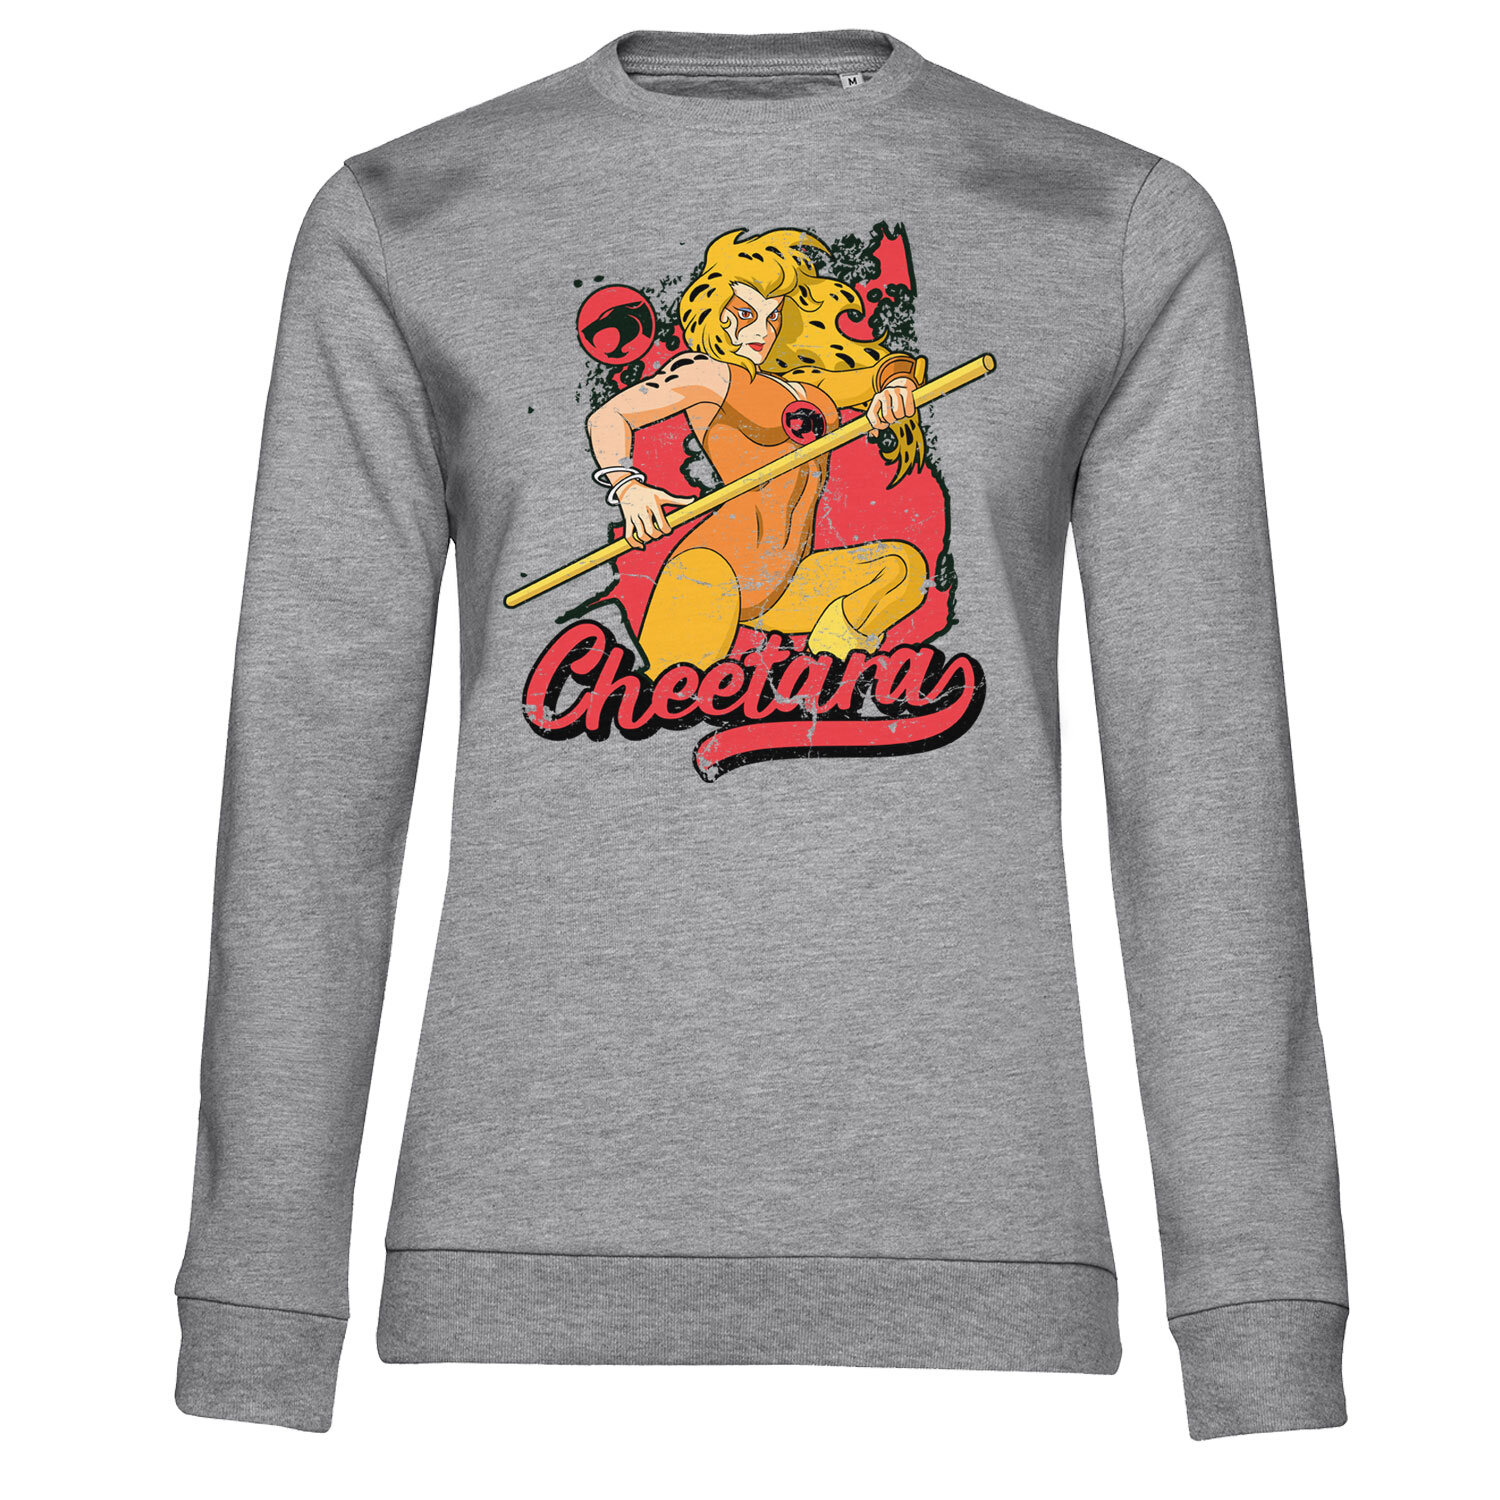 Thundercats - Cheetara Distressed Girly Sweatshirt